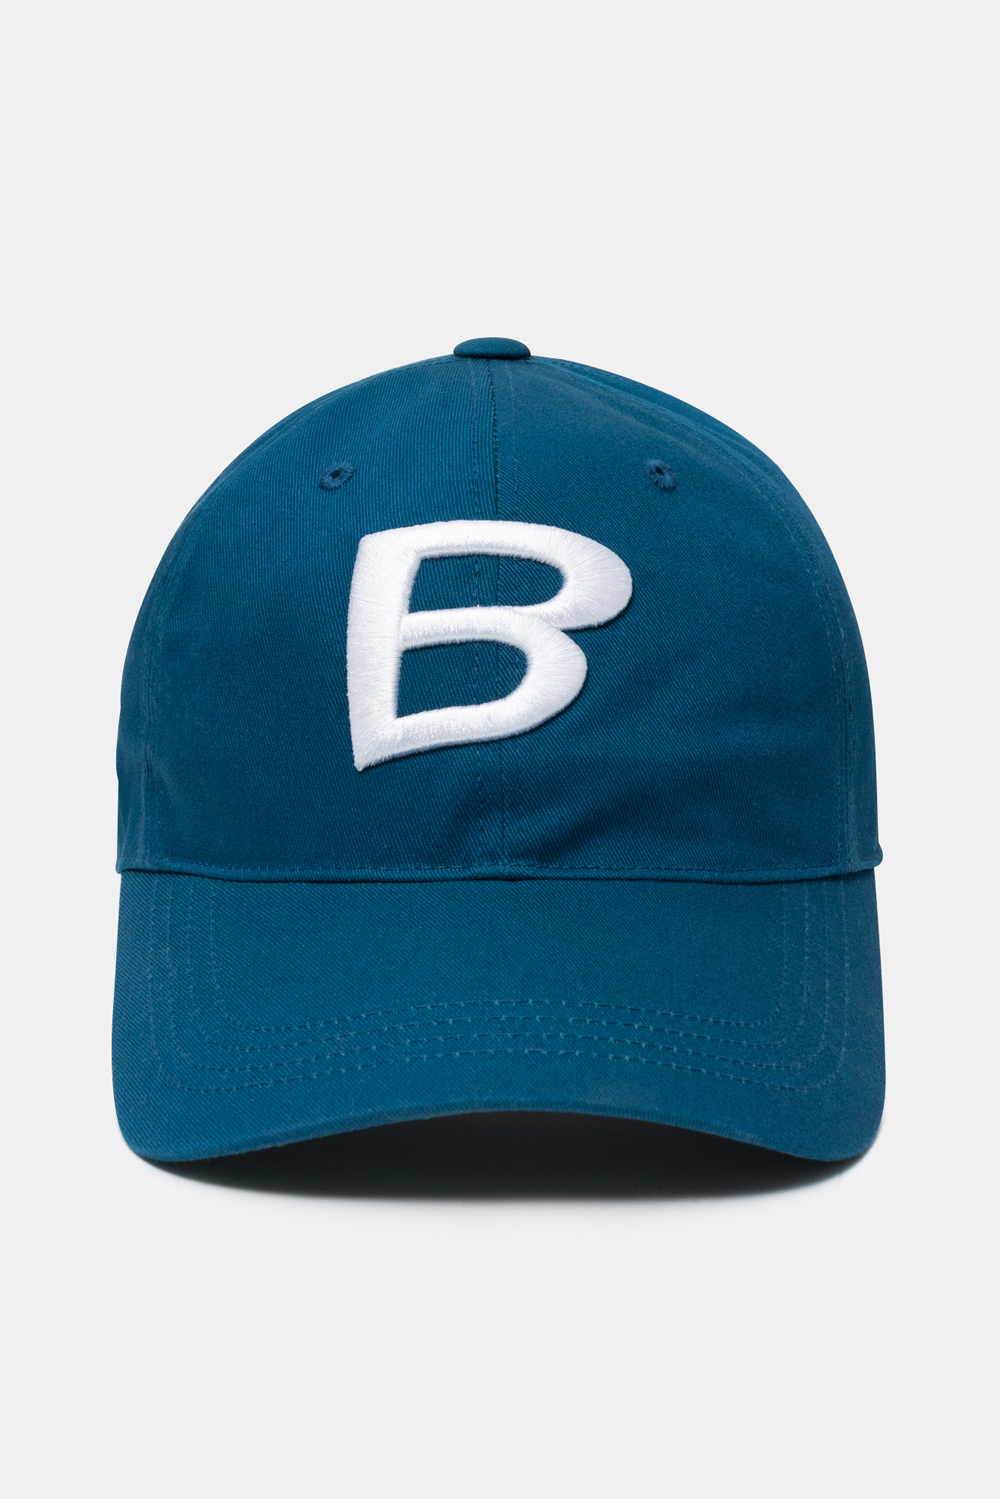 B LOGO BALL CAP